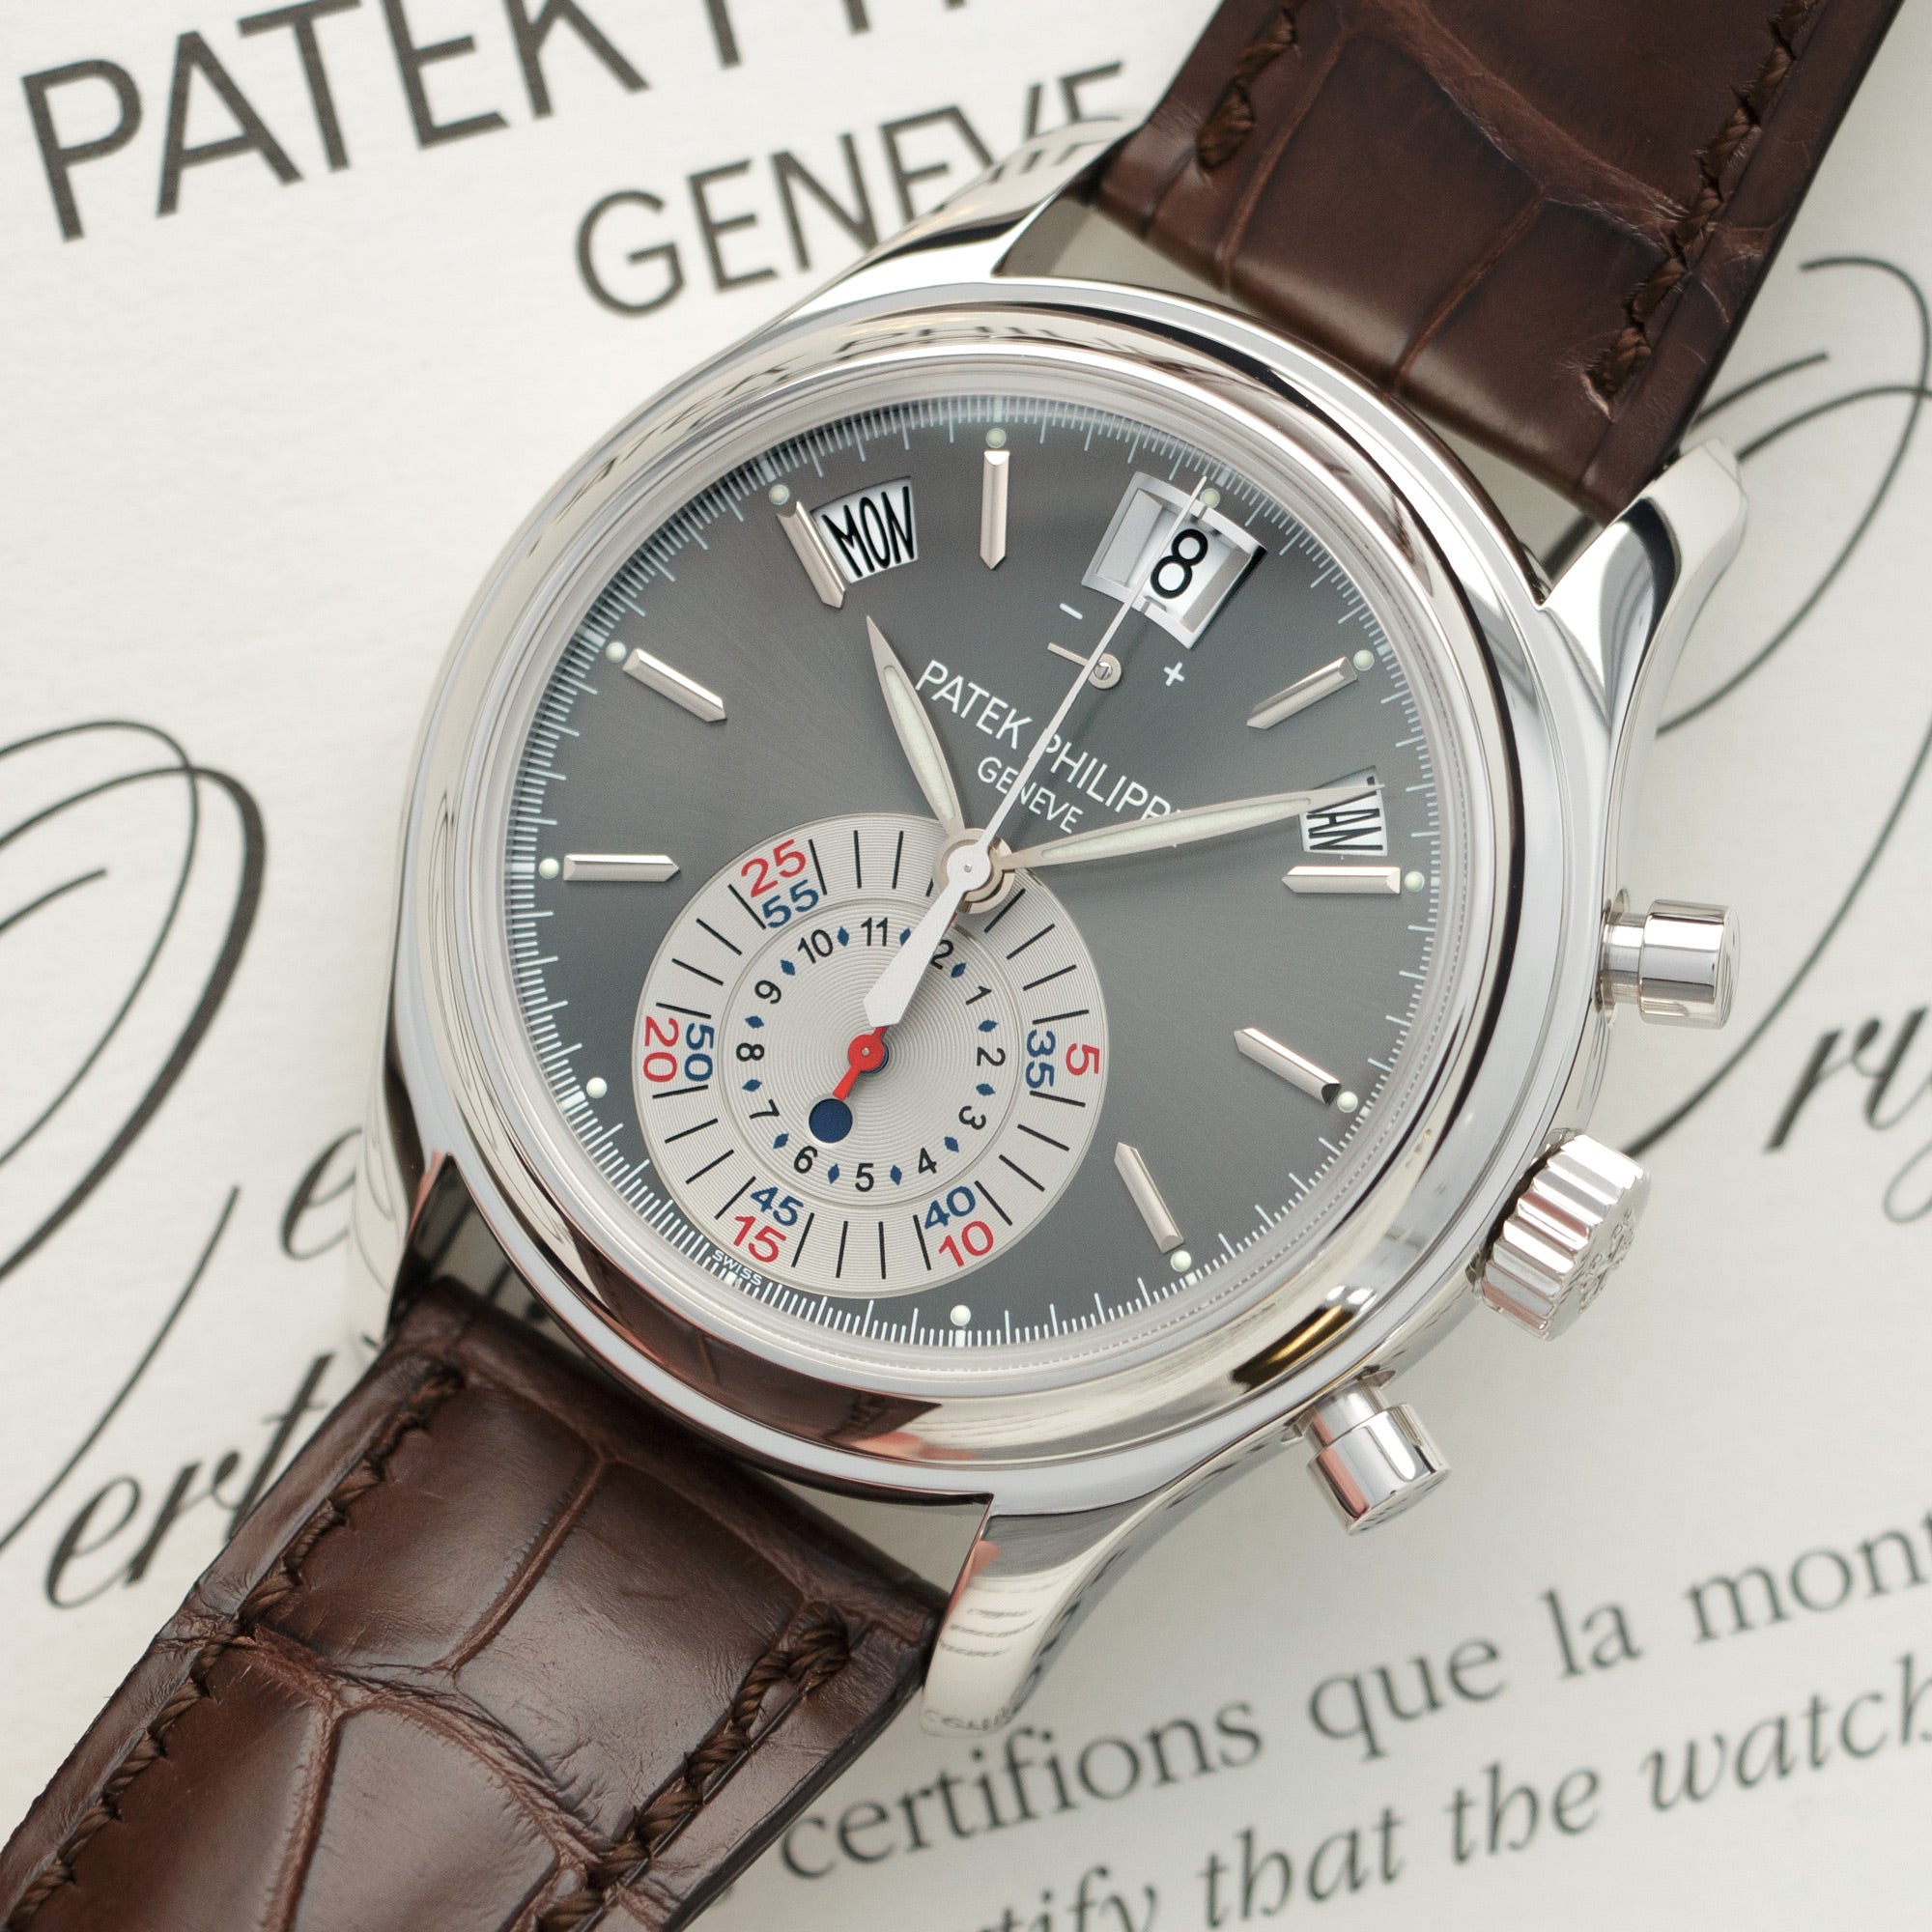 Patek Philippe - Patek Philippe Platinum Annual Calendar Chronograph Watch, Ref. 5960 - The Keystone Watches